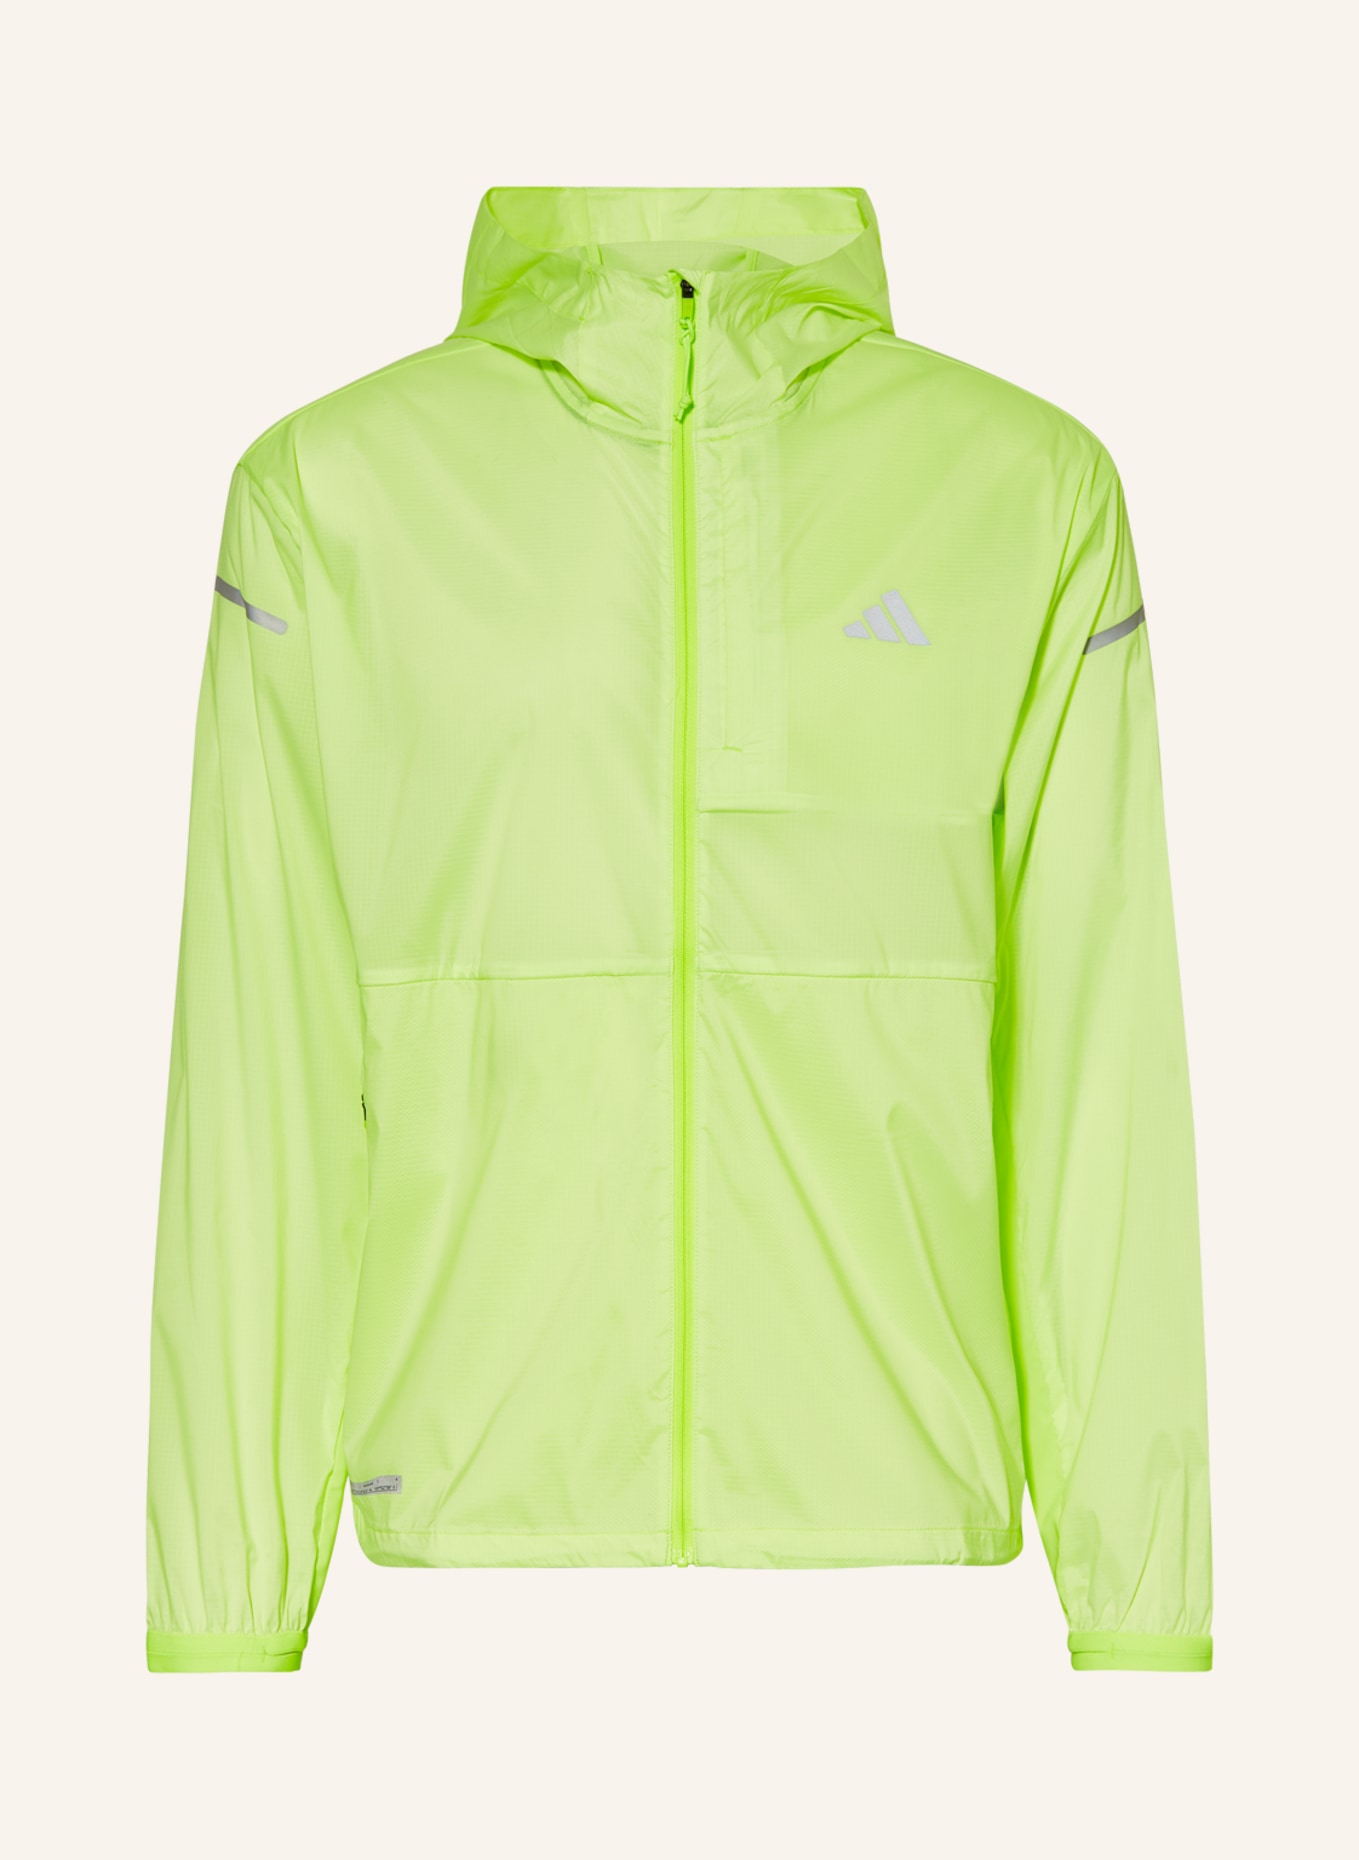 ULTIMATE jacket neon in yellow Running adidas